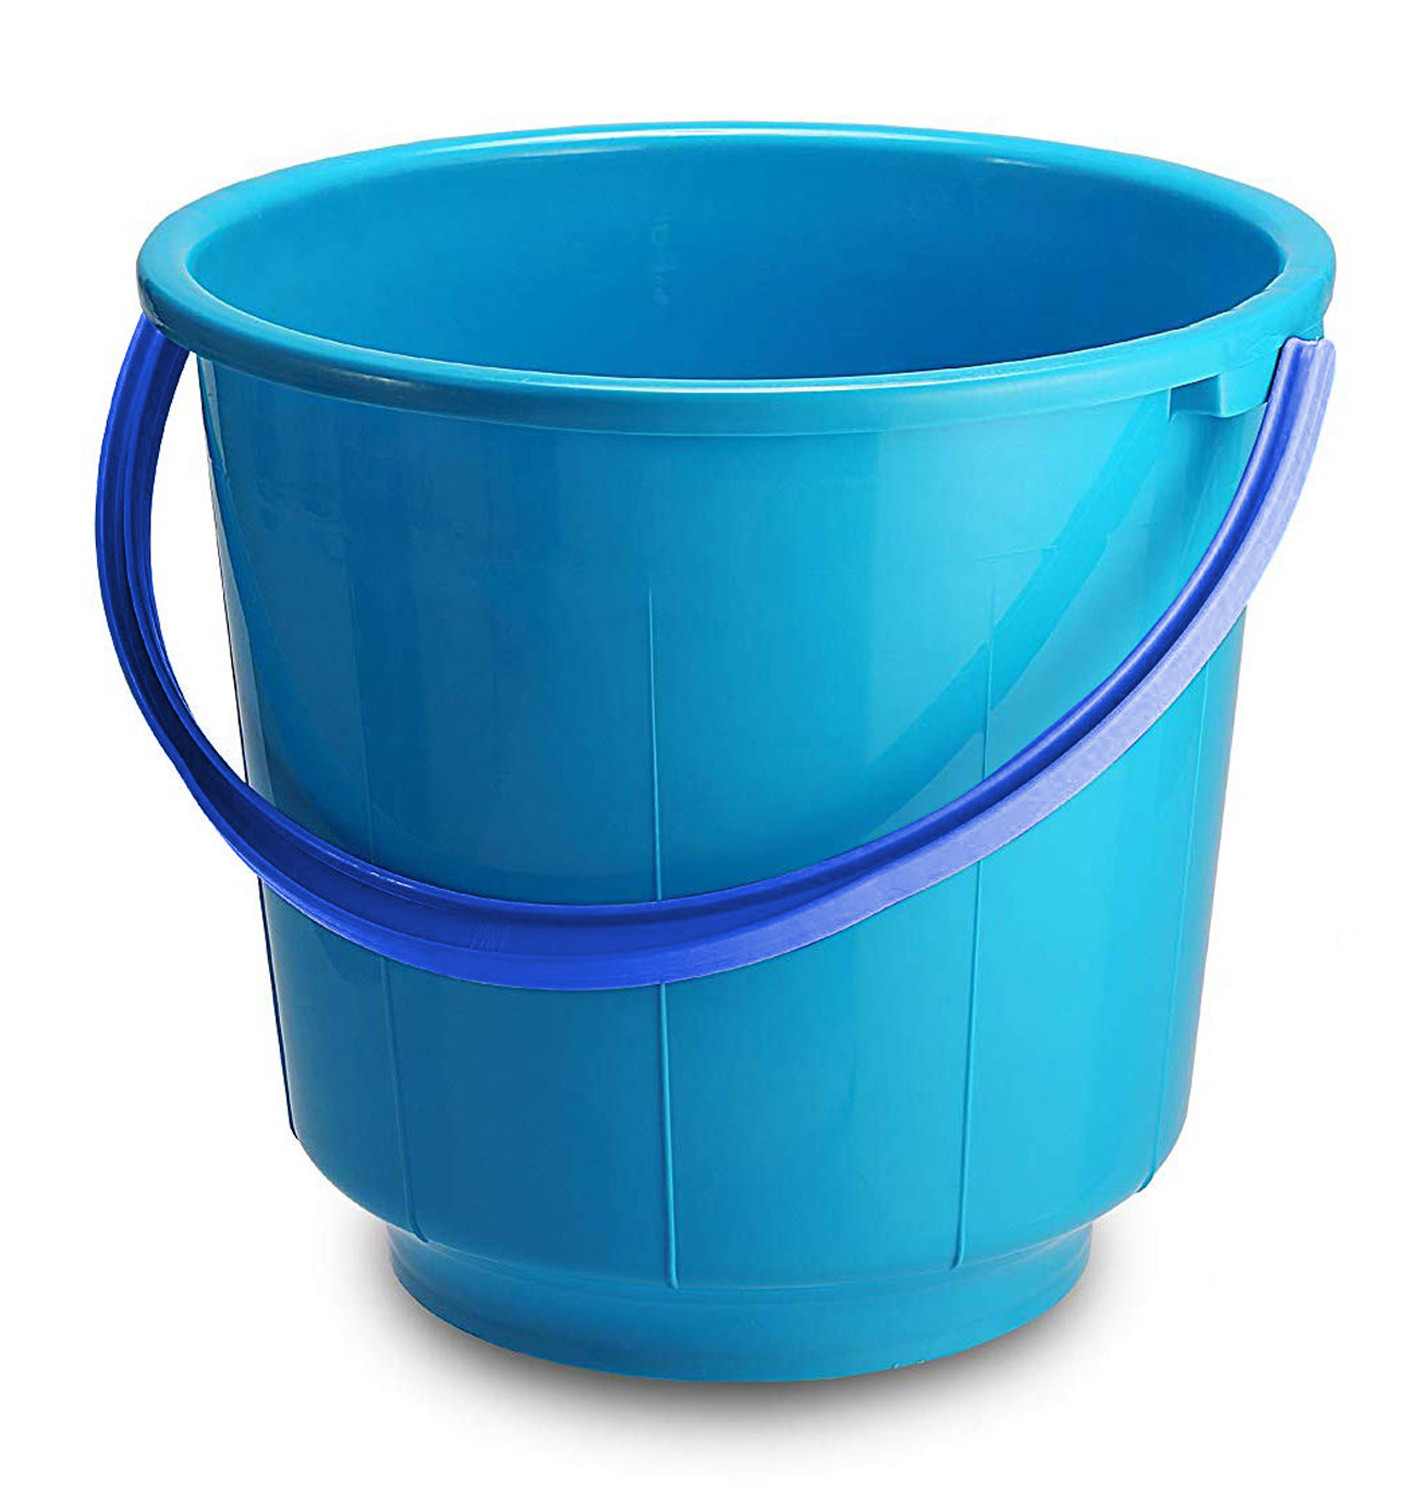 Kuber Industries  Unbreakable Strong Plastic Bathroom Bucket 13 Ltr (Green & Blue) -CTKTC37917